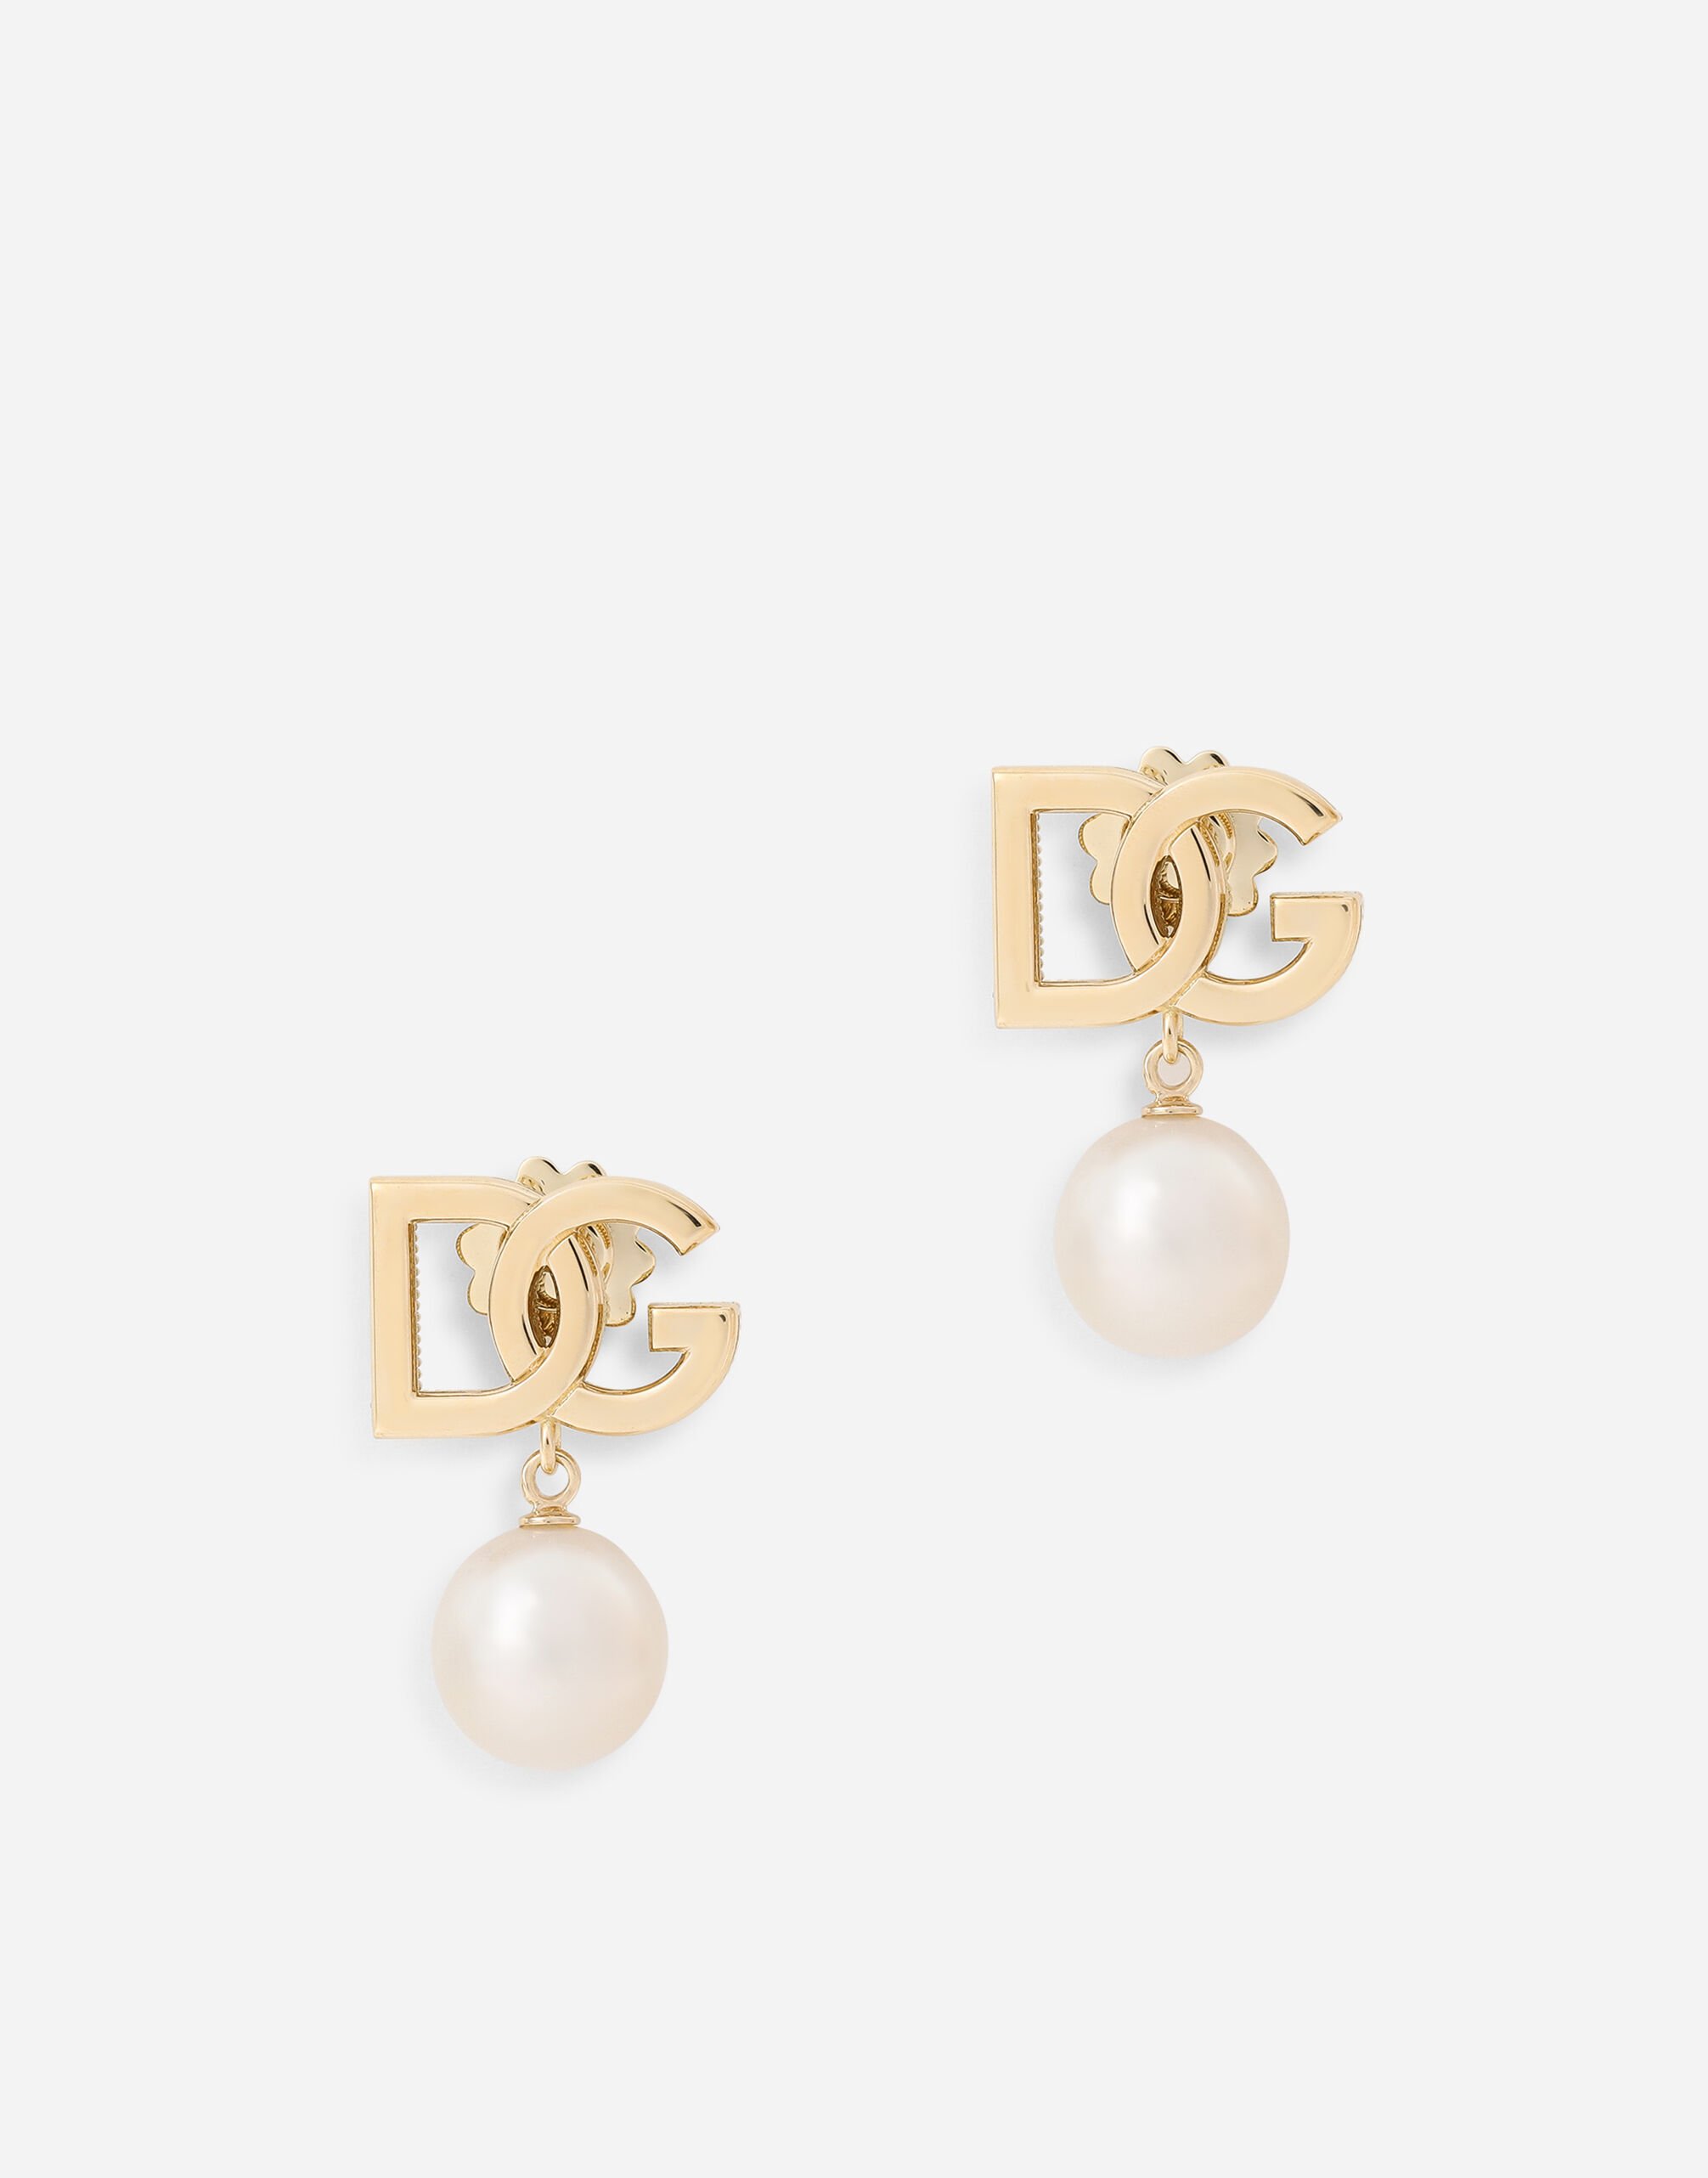 Dolce & Gabbana Logo earrings in yellow 18kt gold with pearls Gold WALK5GWYE01